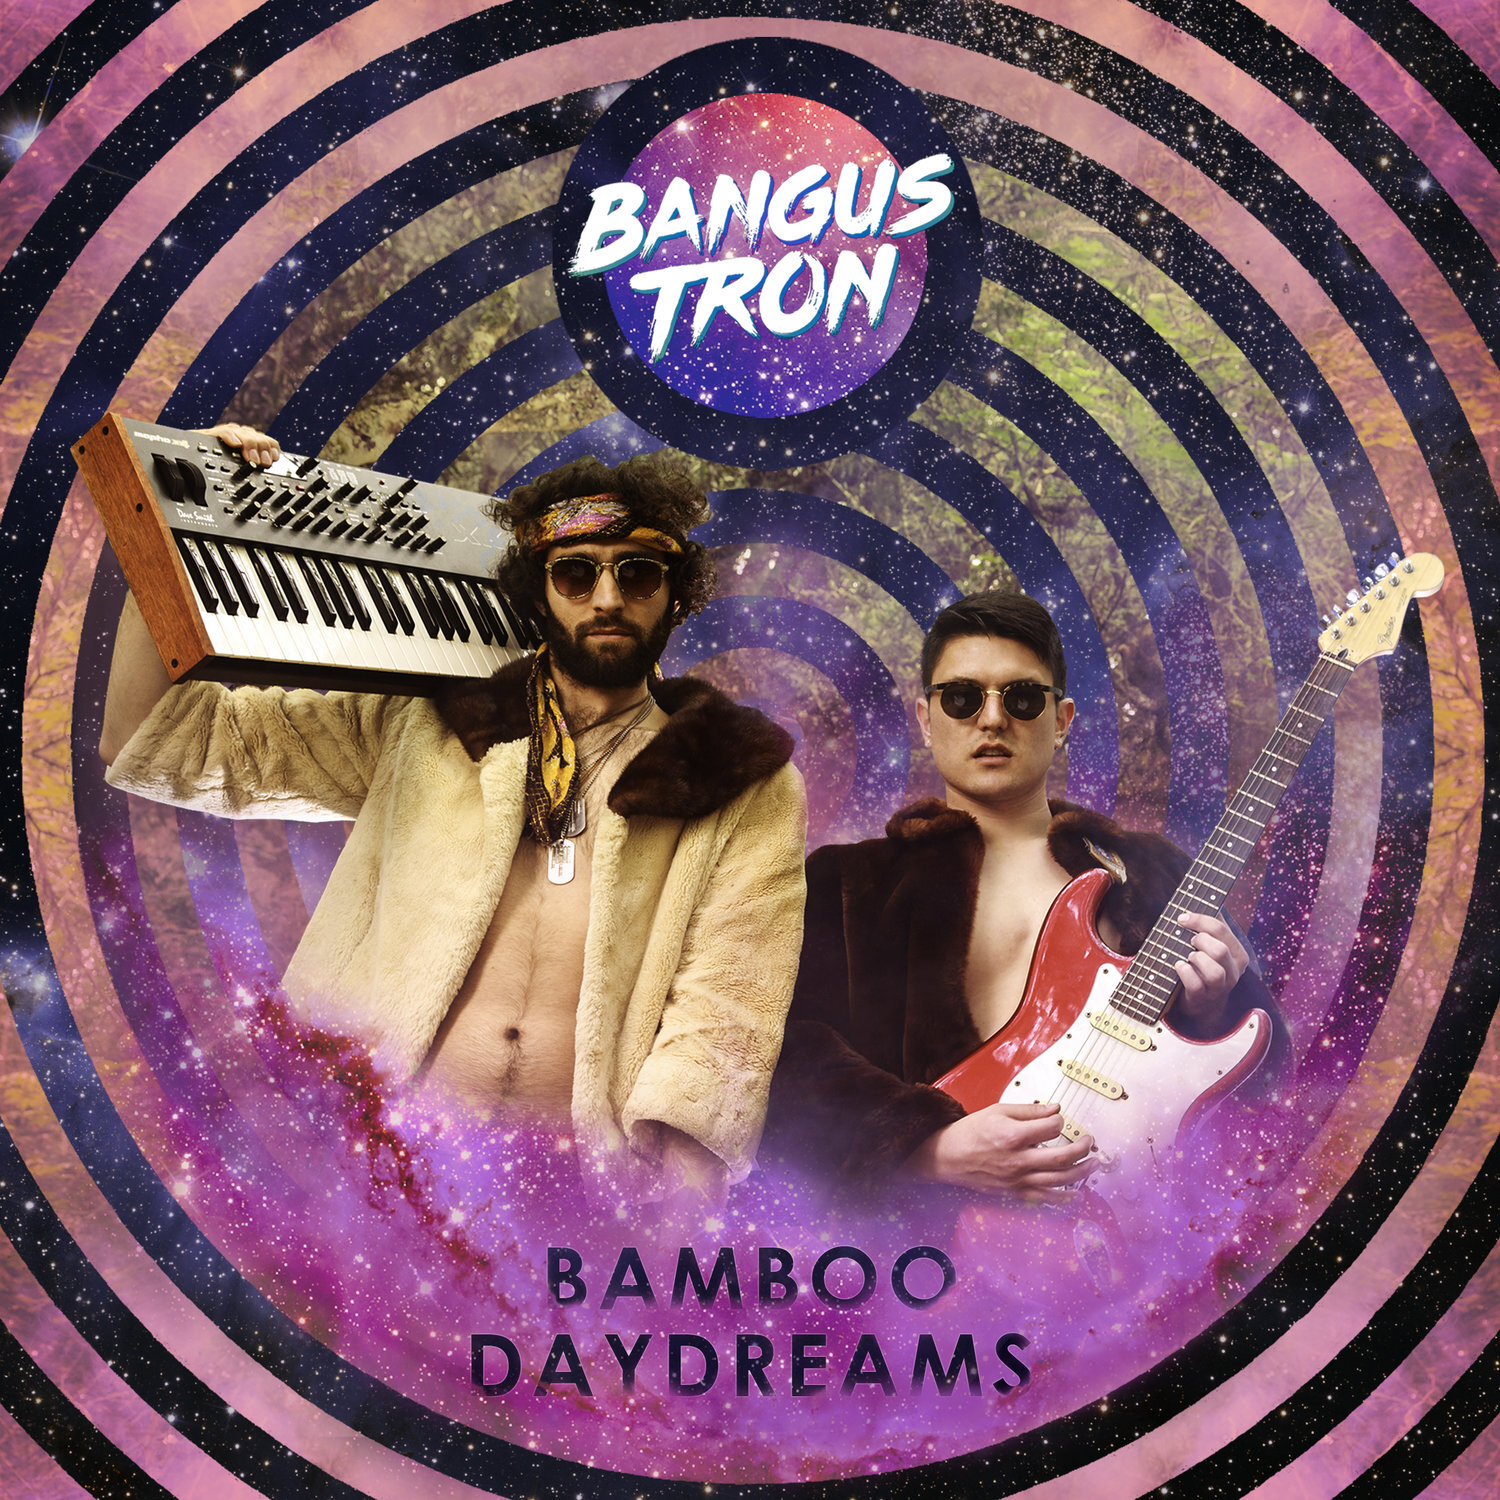 Bangus Tron, "Bamboo Daydreams" (EP)